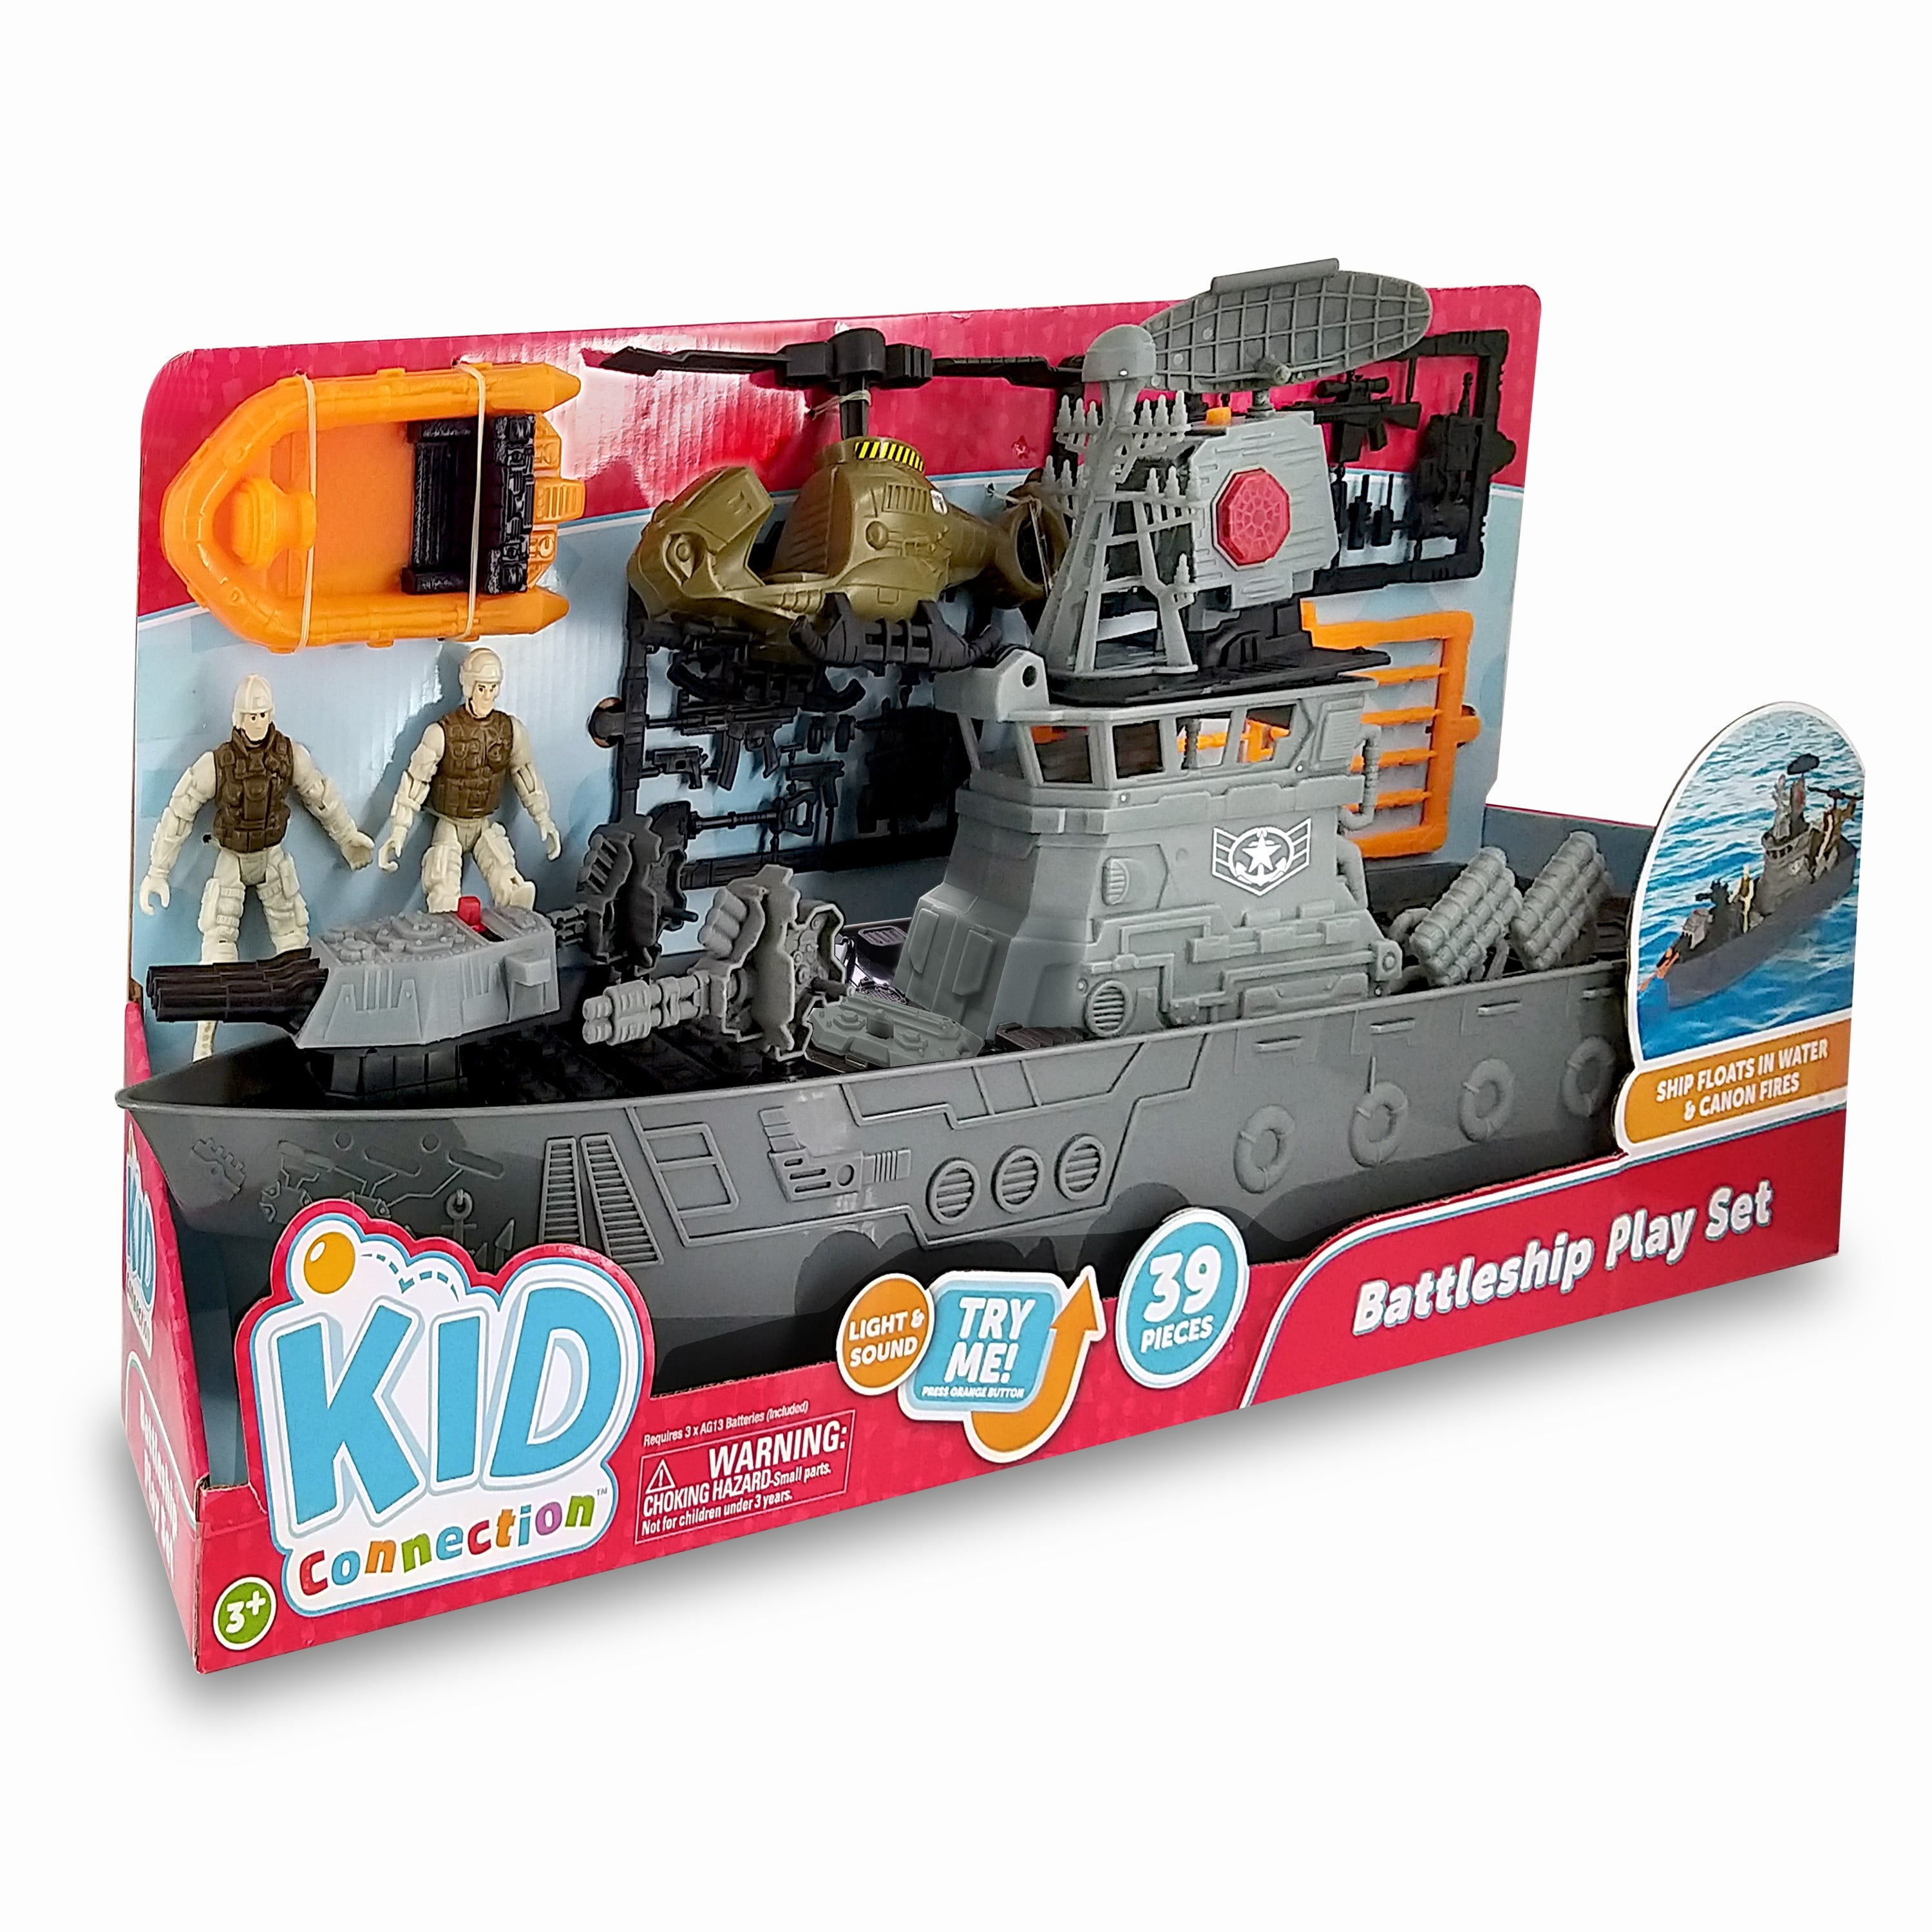 Kid Connection Battle Ship Play Set, 39 Pieces